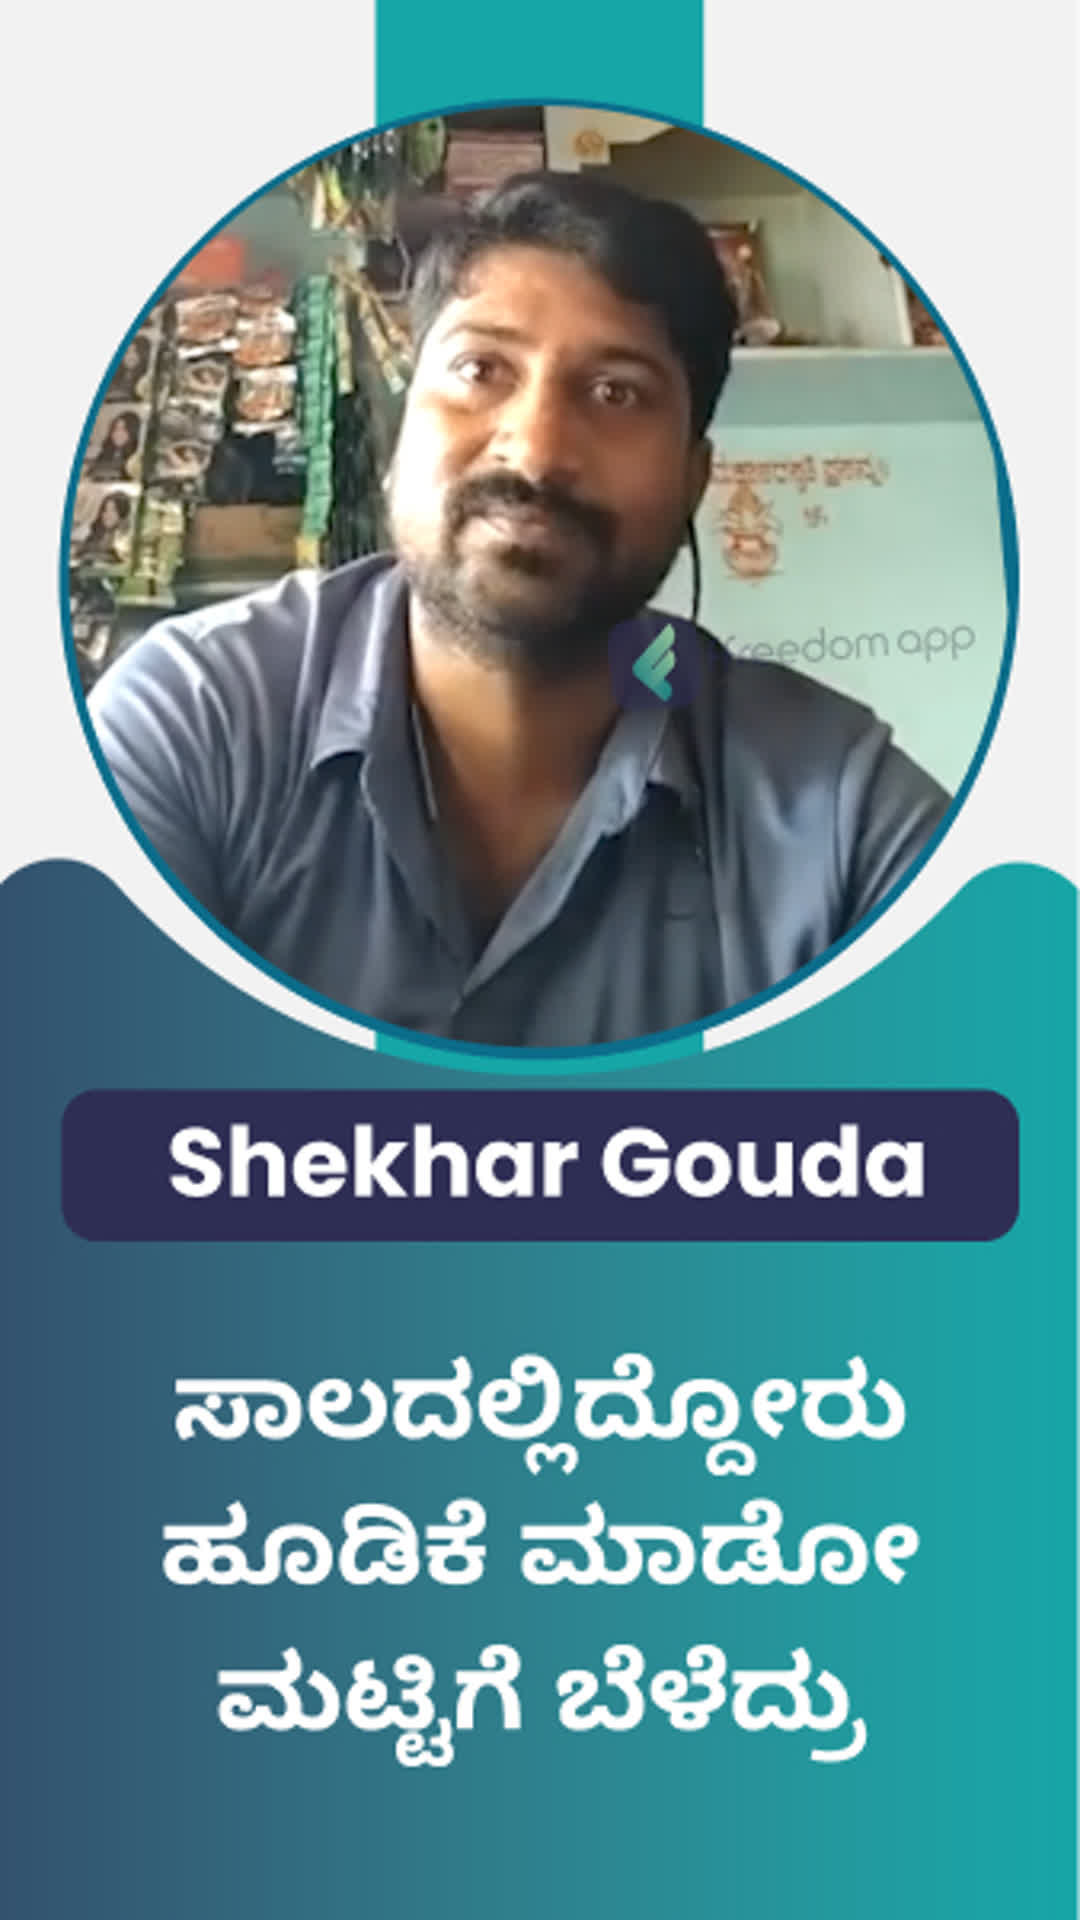 Shekharagouda Goudooru's Honest Review of ffreedom app - Raichur ,Karnataka